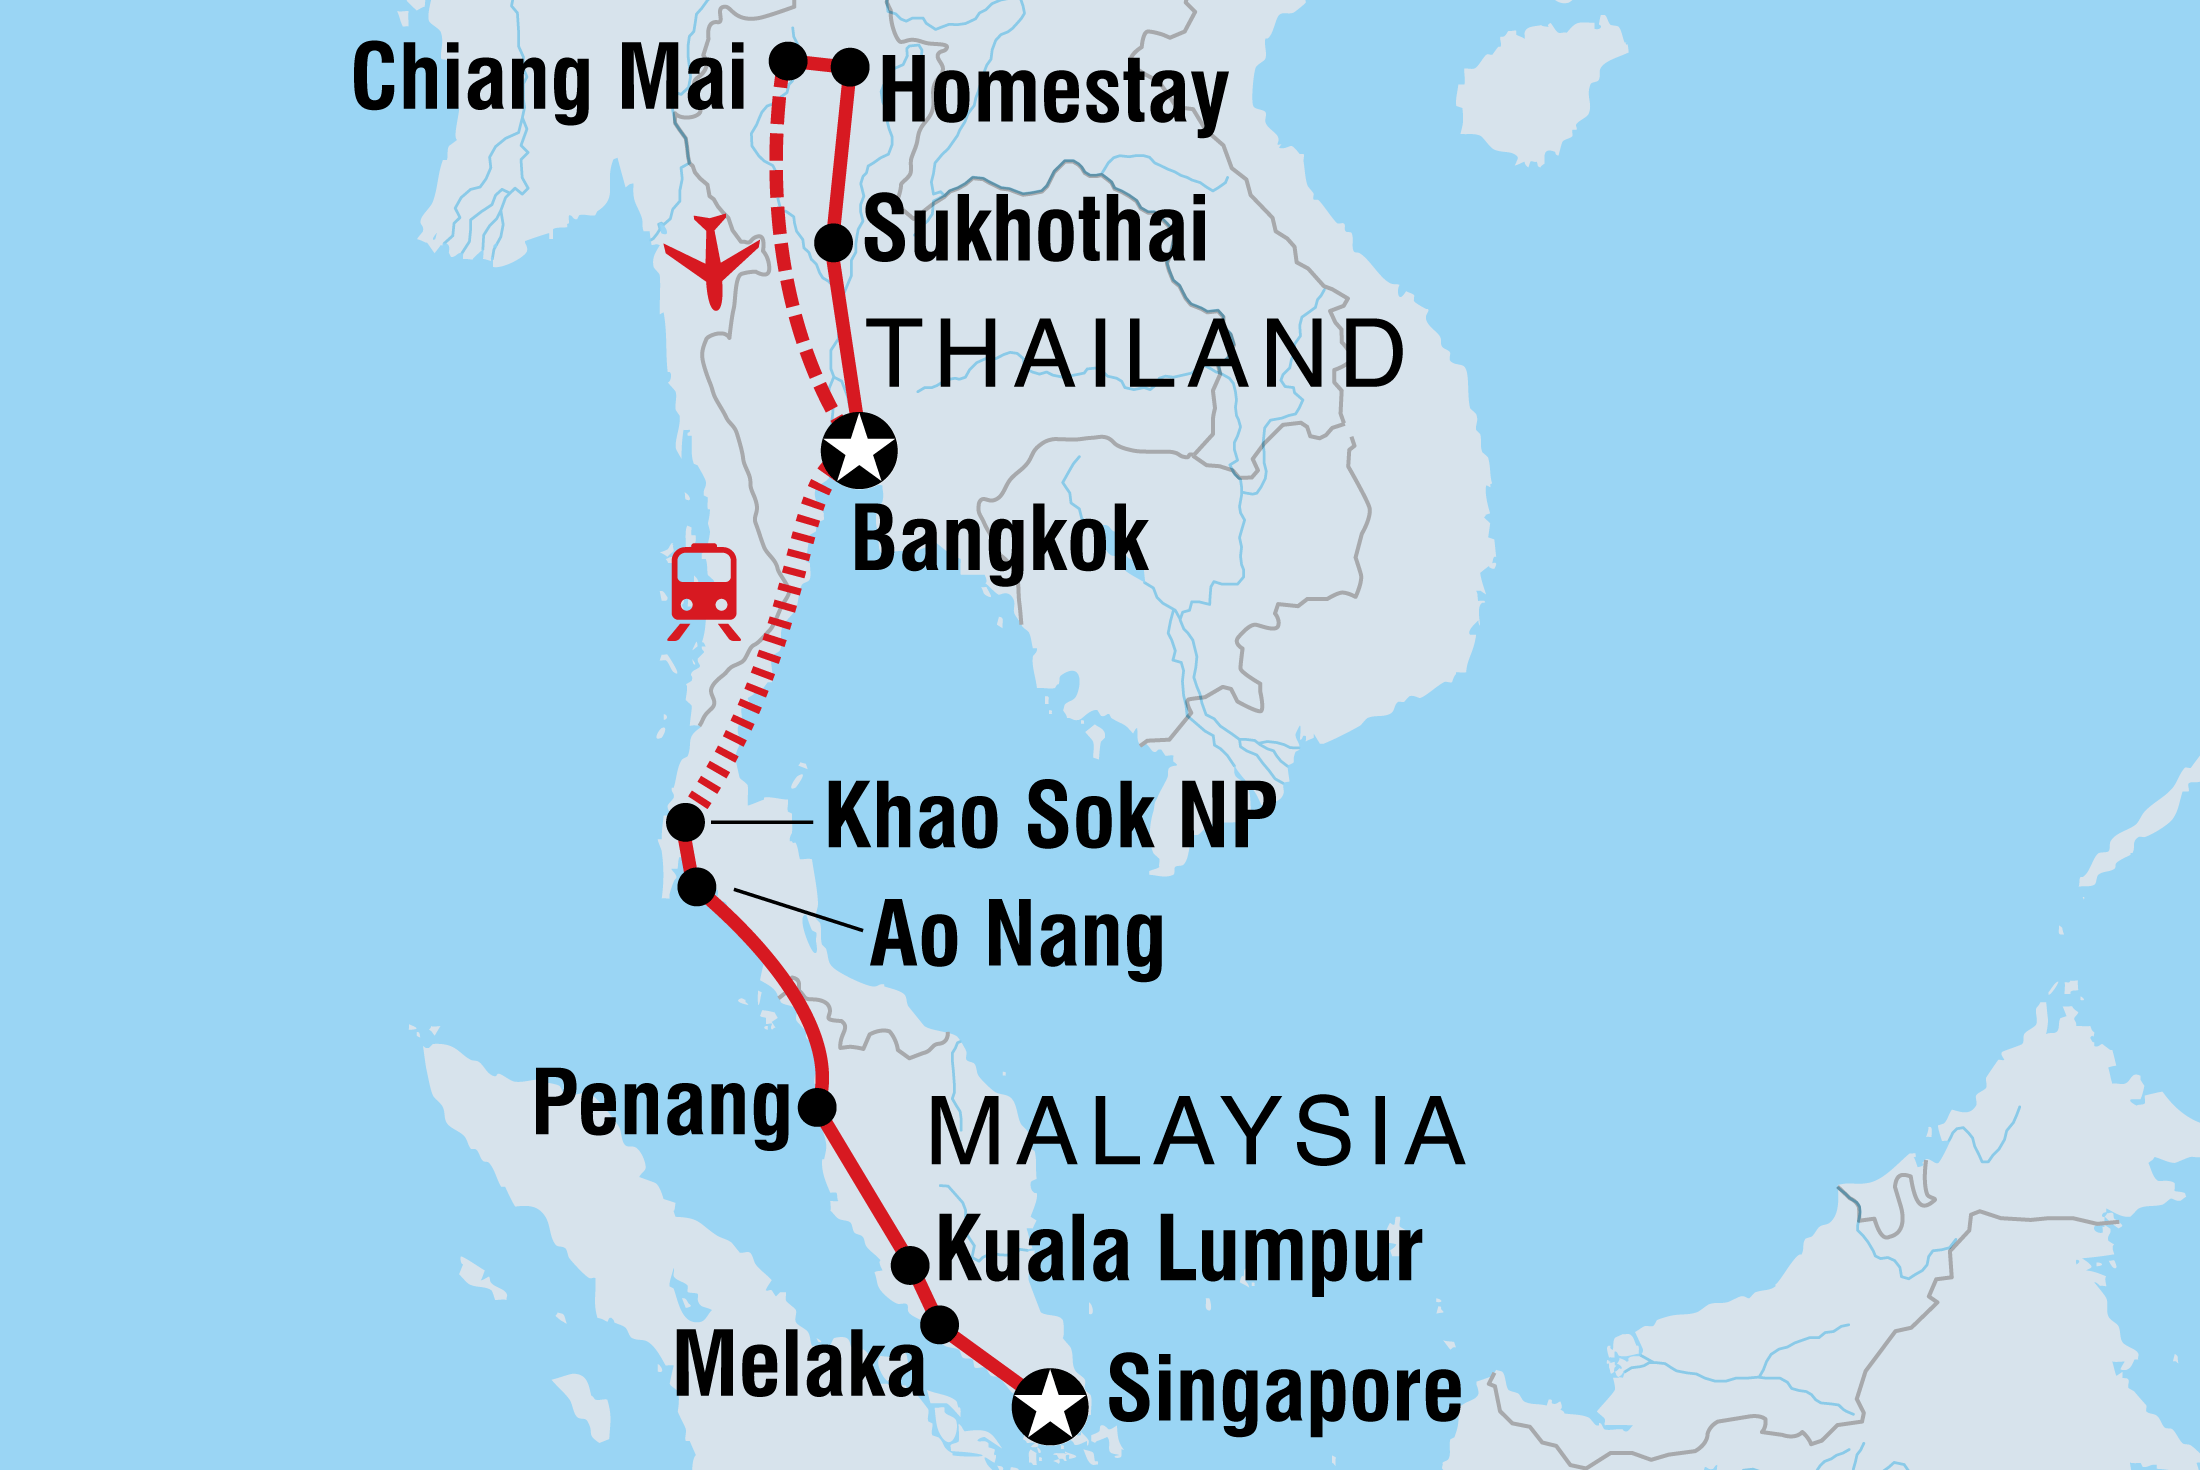 thailand to malaysia road trip